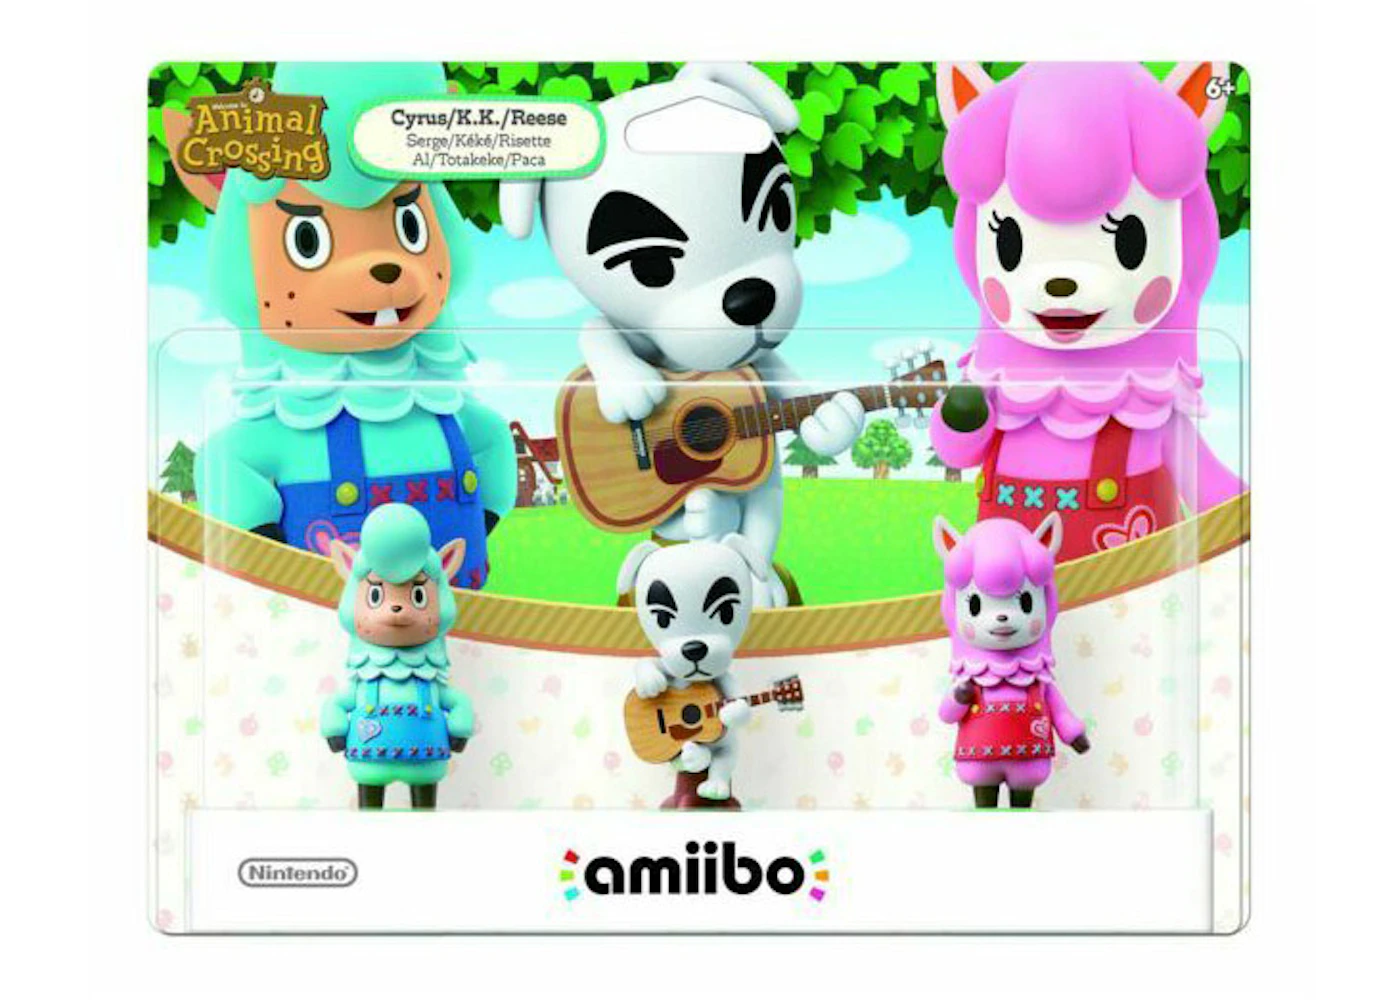 Nintendo Animal Crossing Cyrus/./Reese amiibo - US